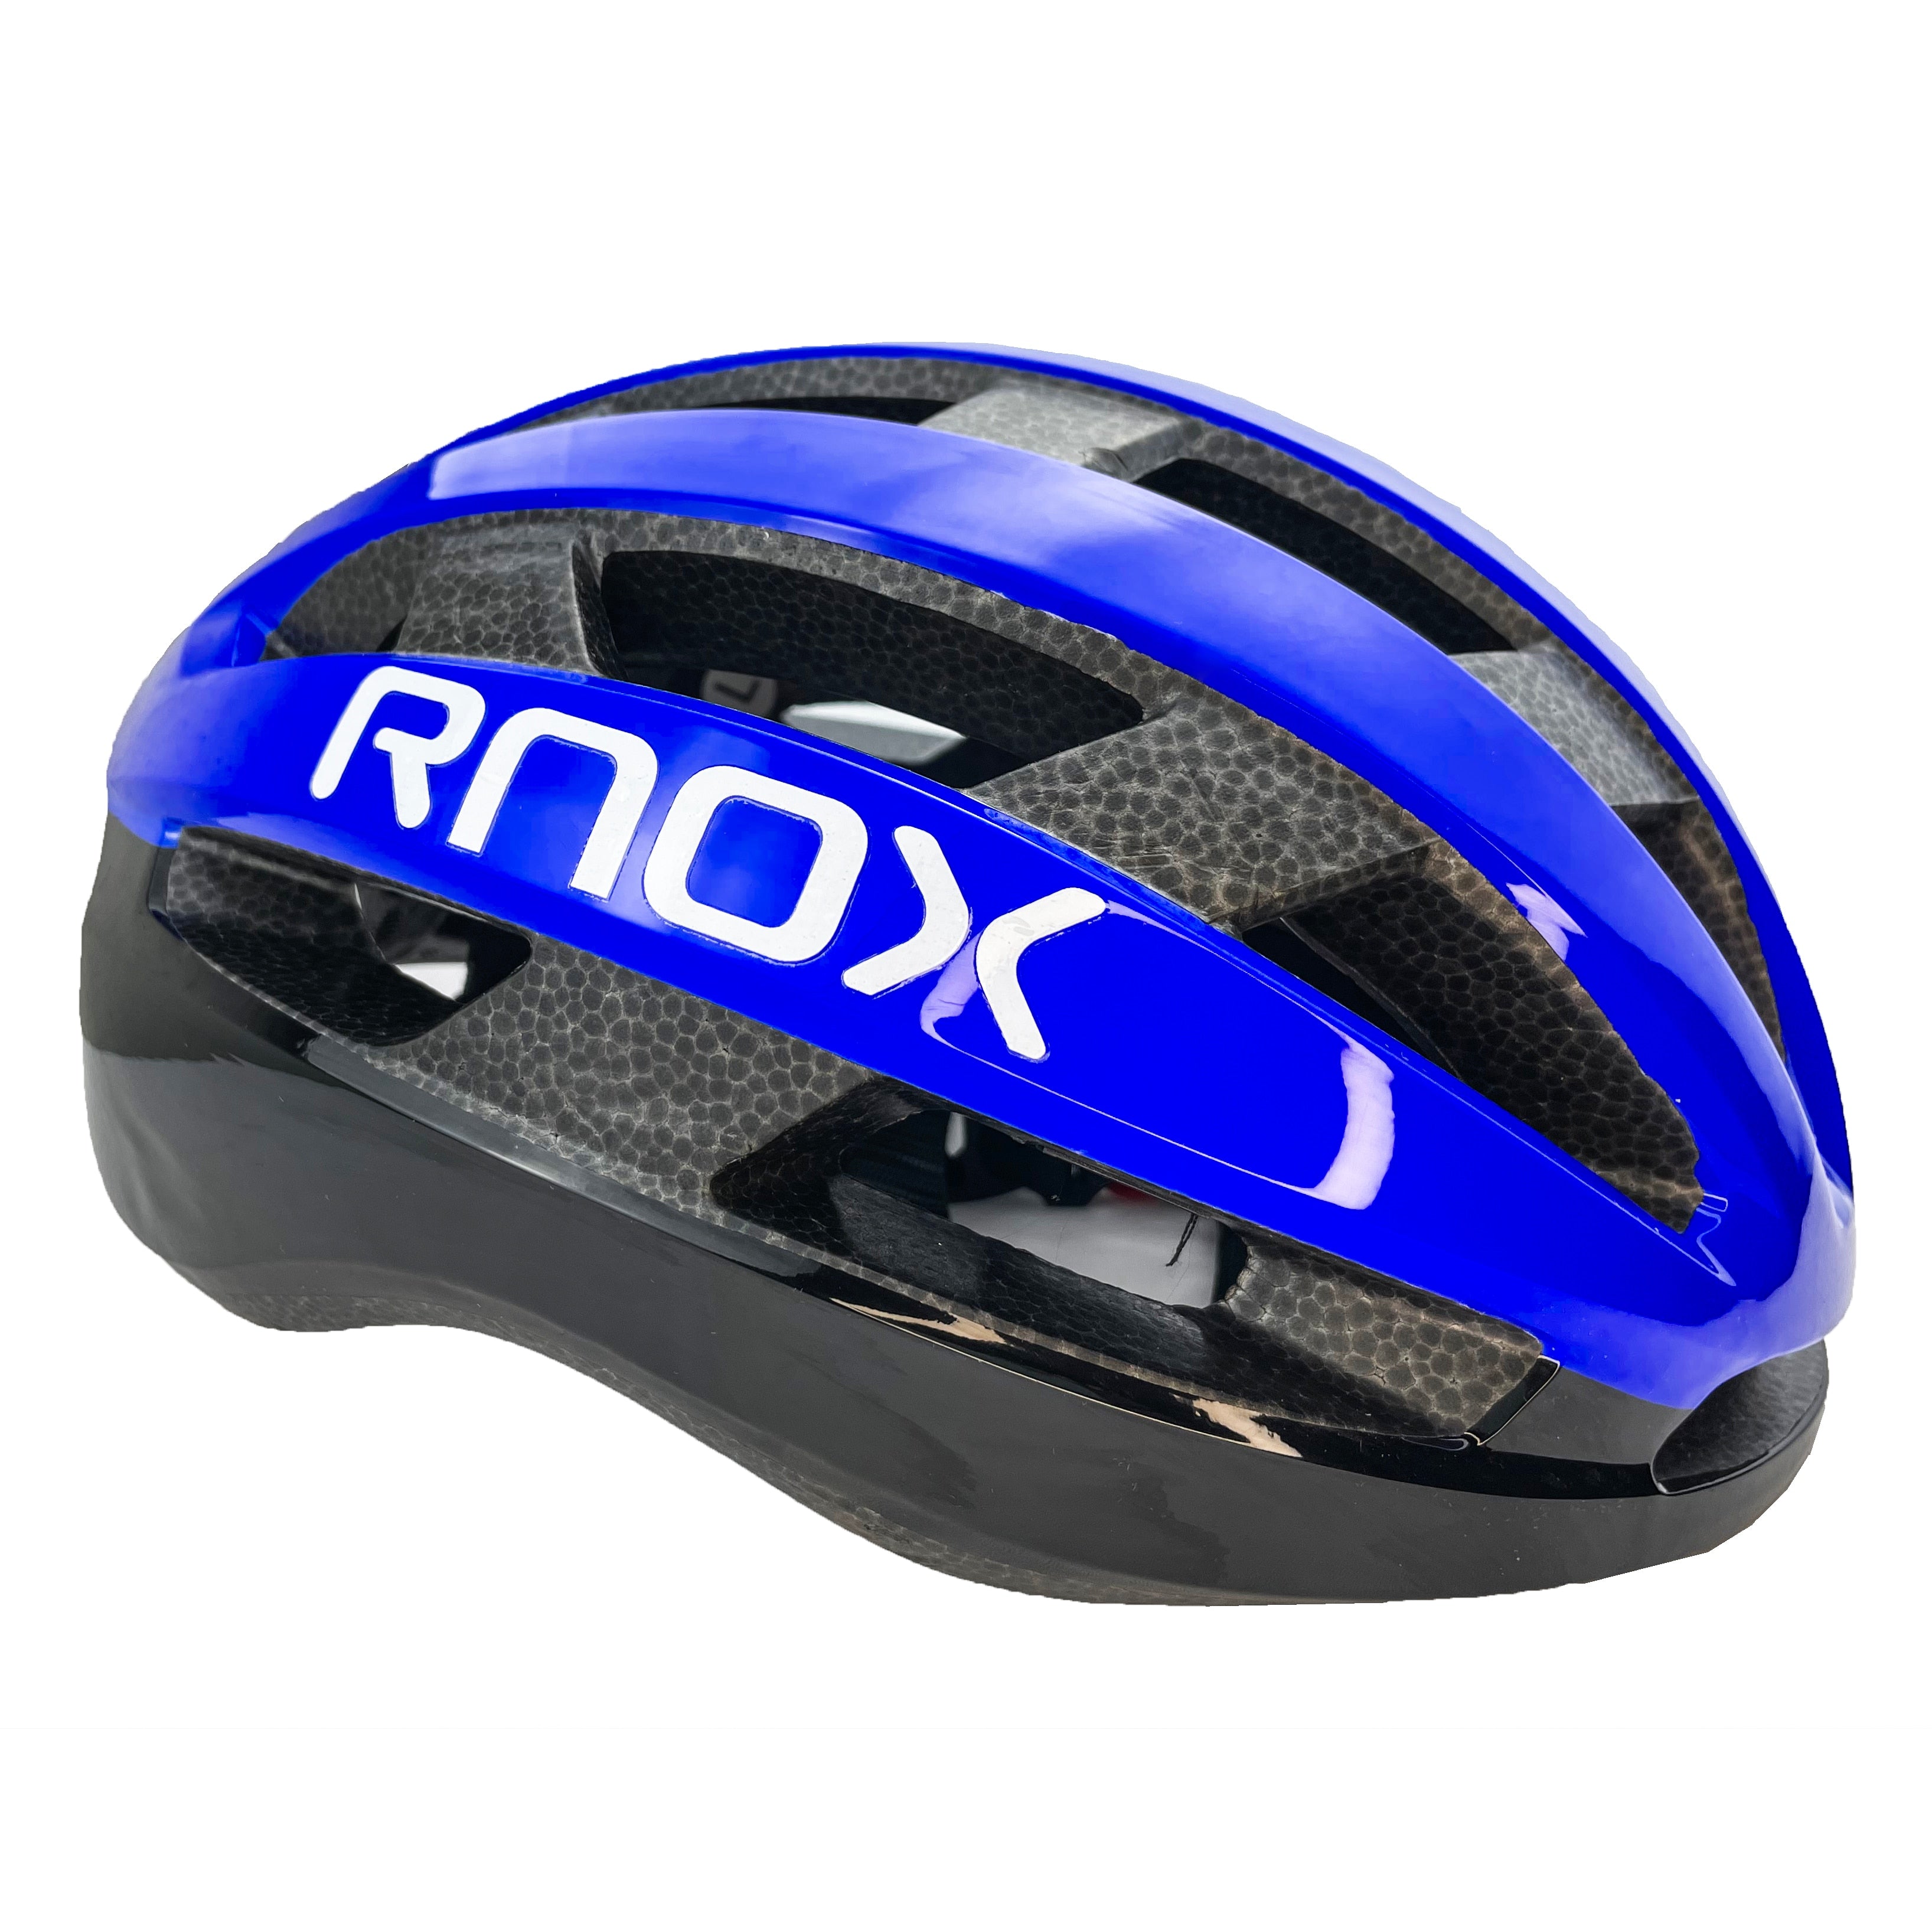 Rnox Aero Ultralight Bicycle Safety Helmet 